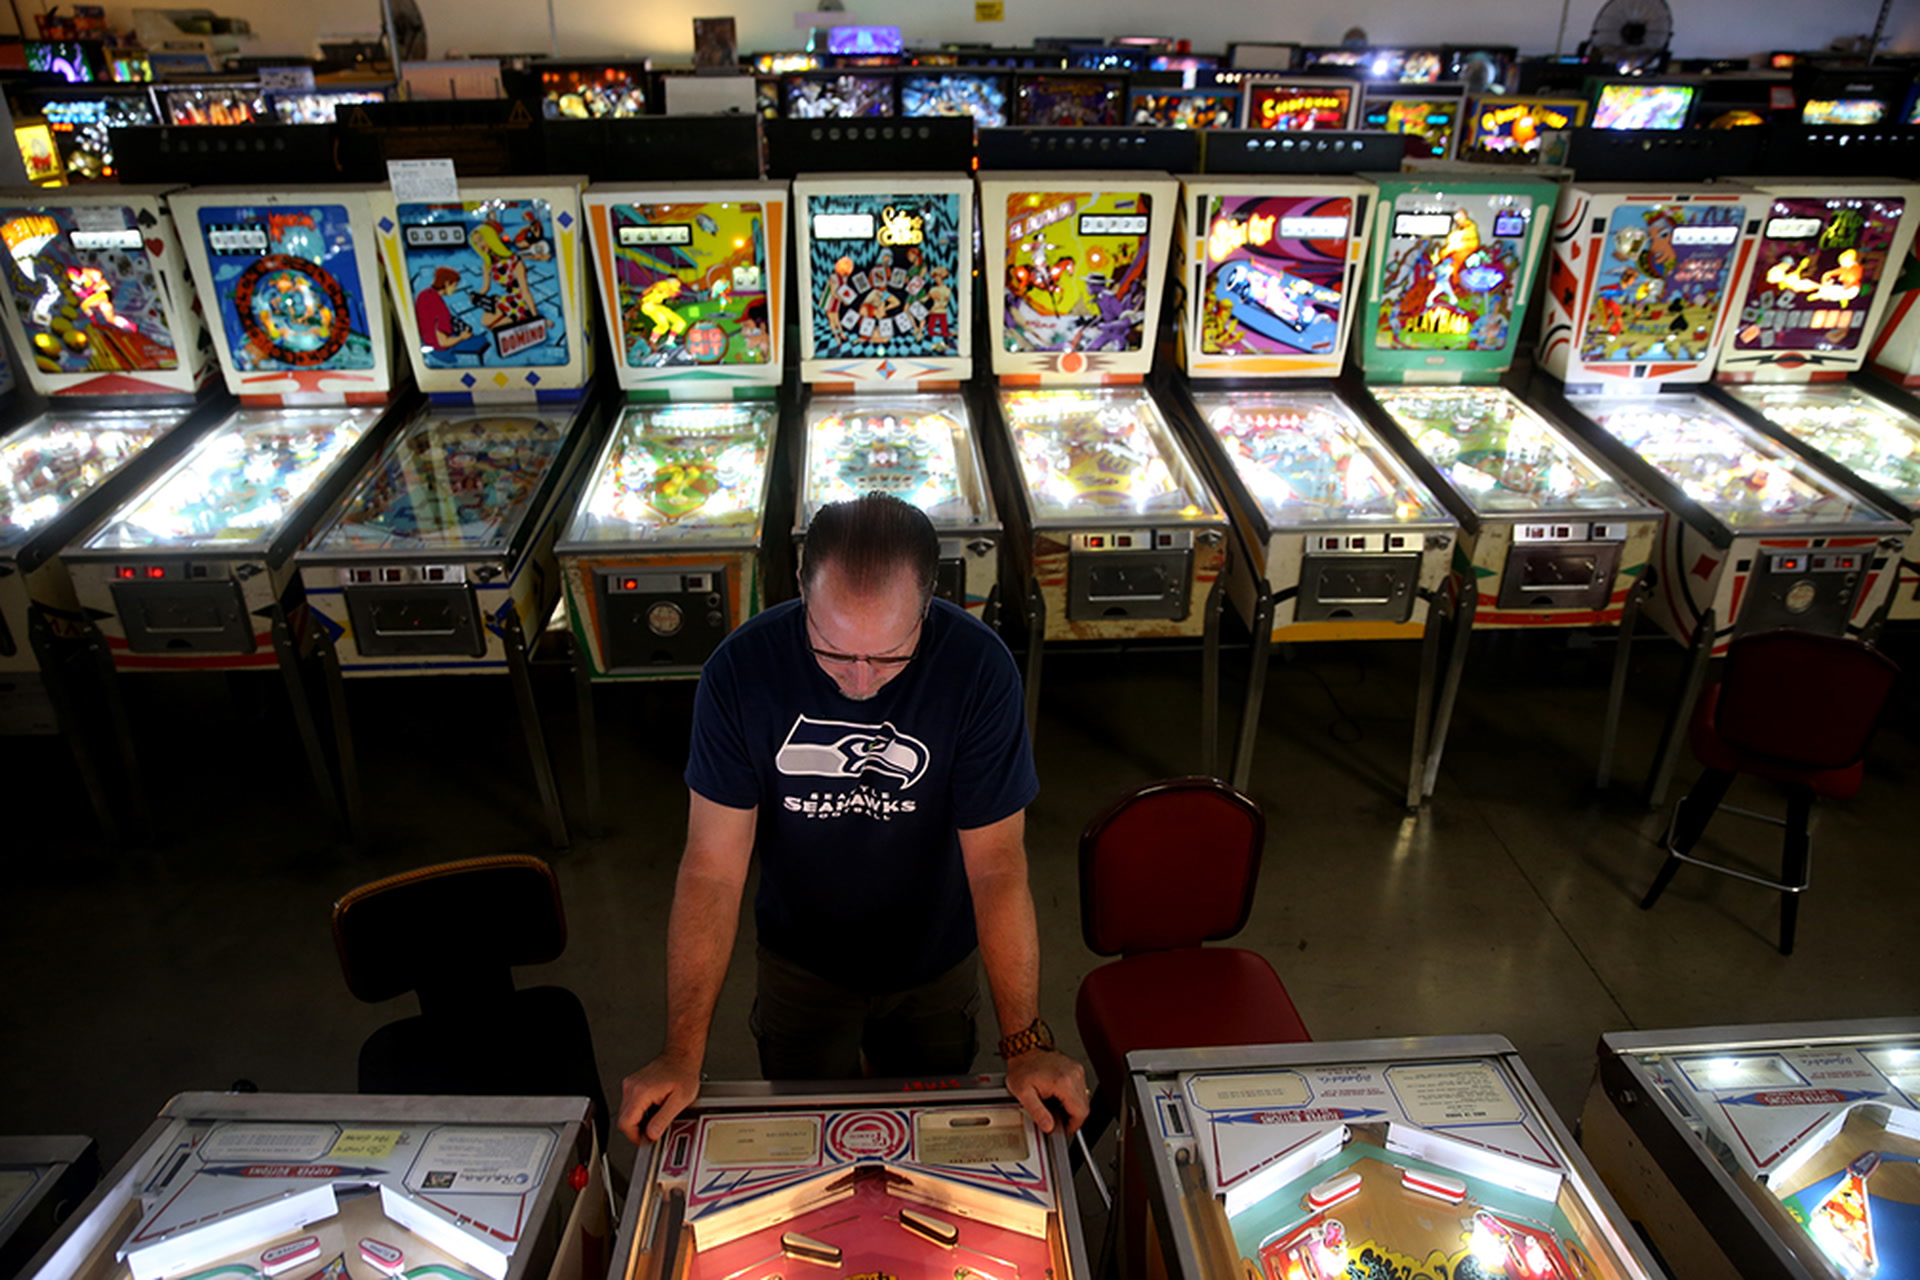 Pinball Hall of Fame - Las Vegas : r/pinball